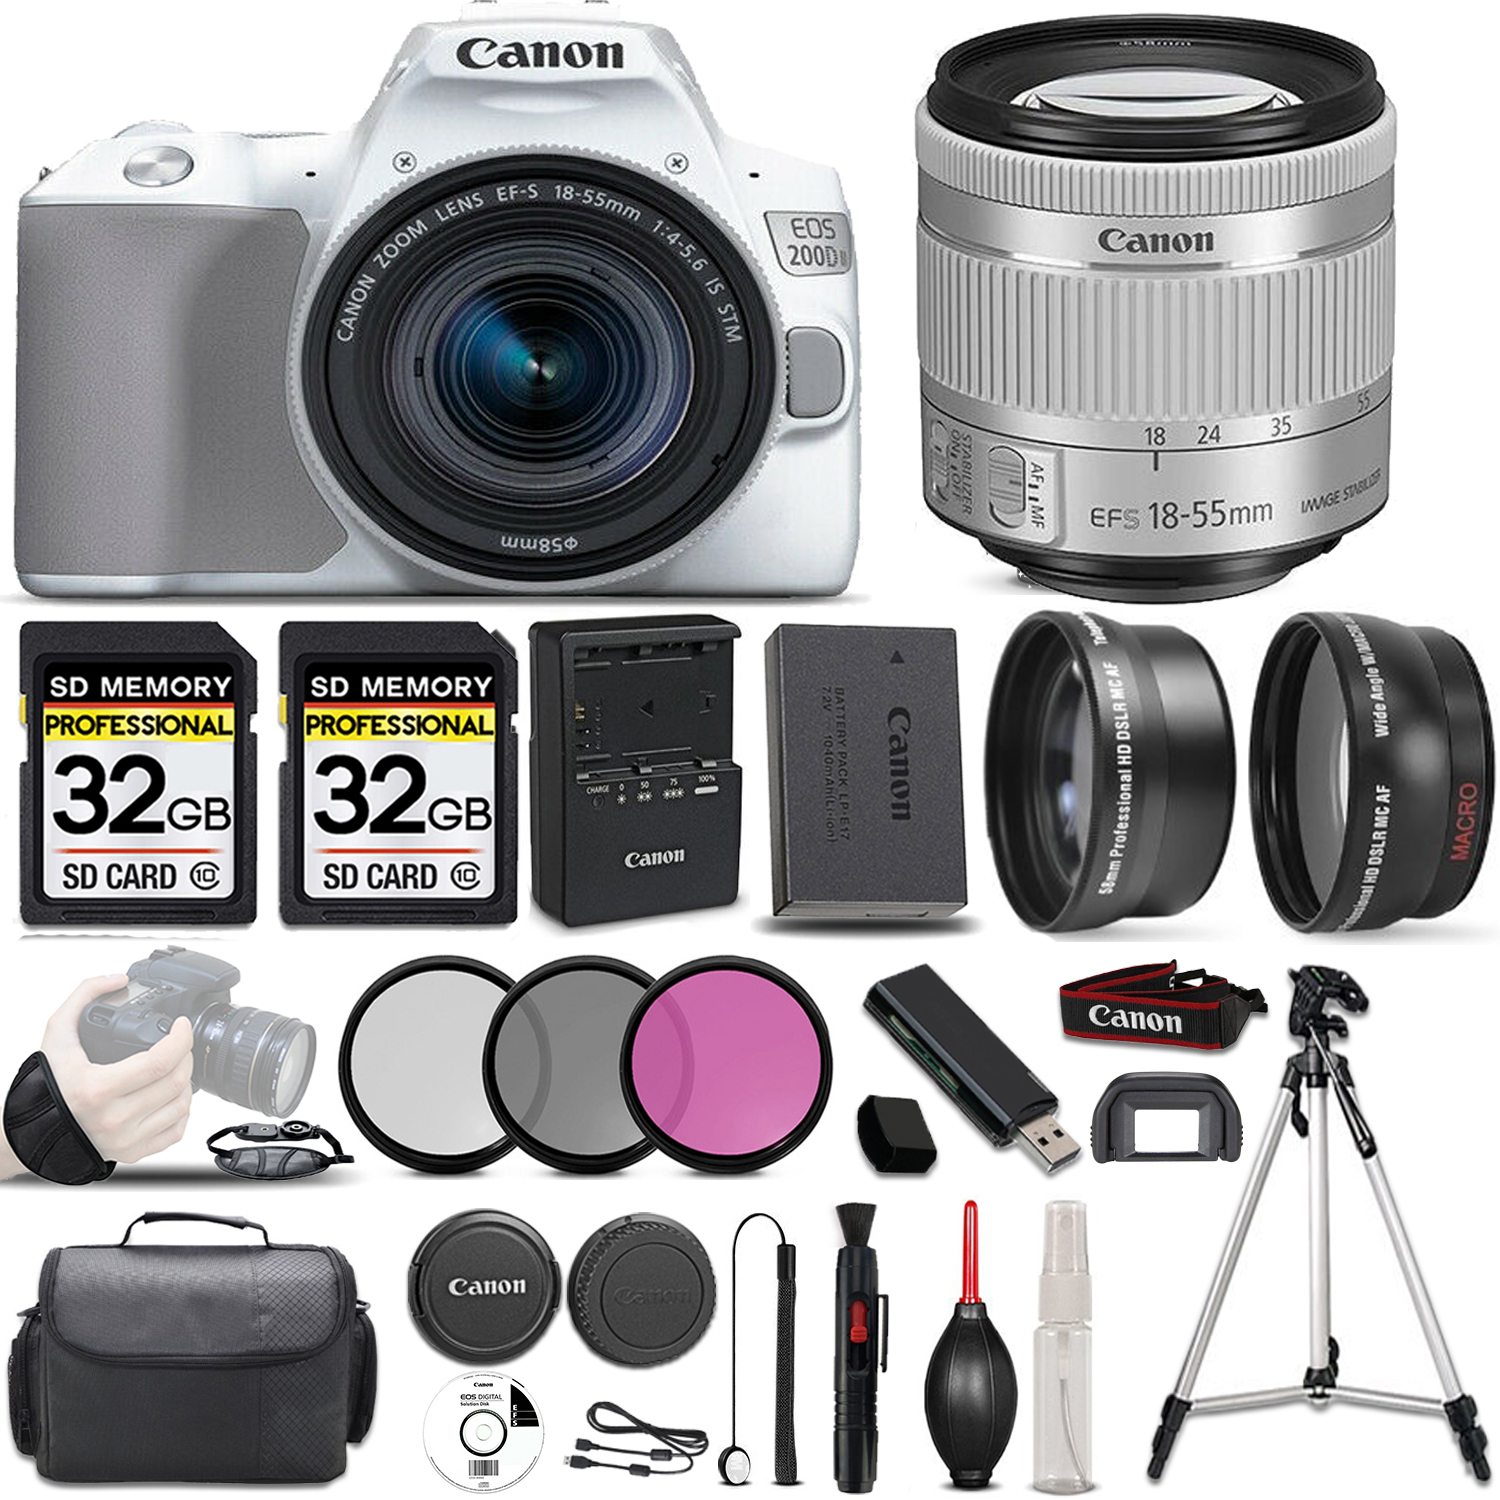 EOS Rebel 200D DSLR Camera(White)+ 18-55mm STM Lens + 64GB- Accessory Kit *FREE SHIPPING*